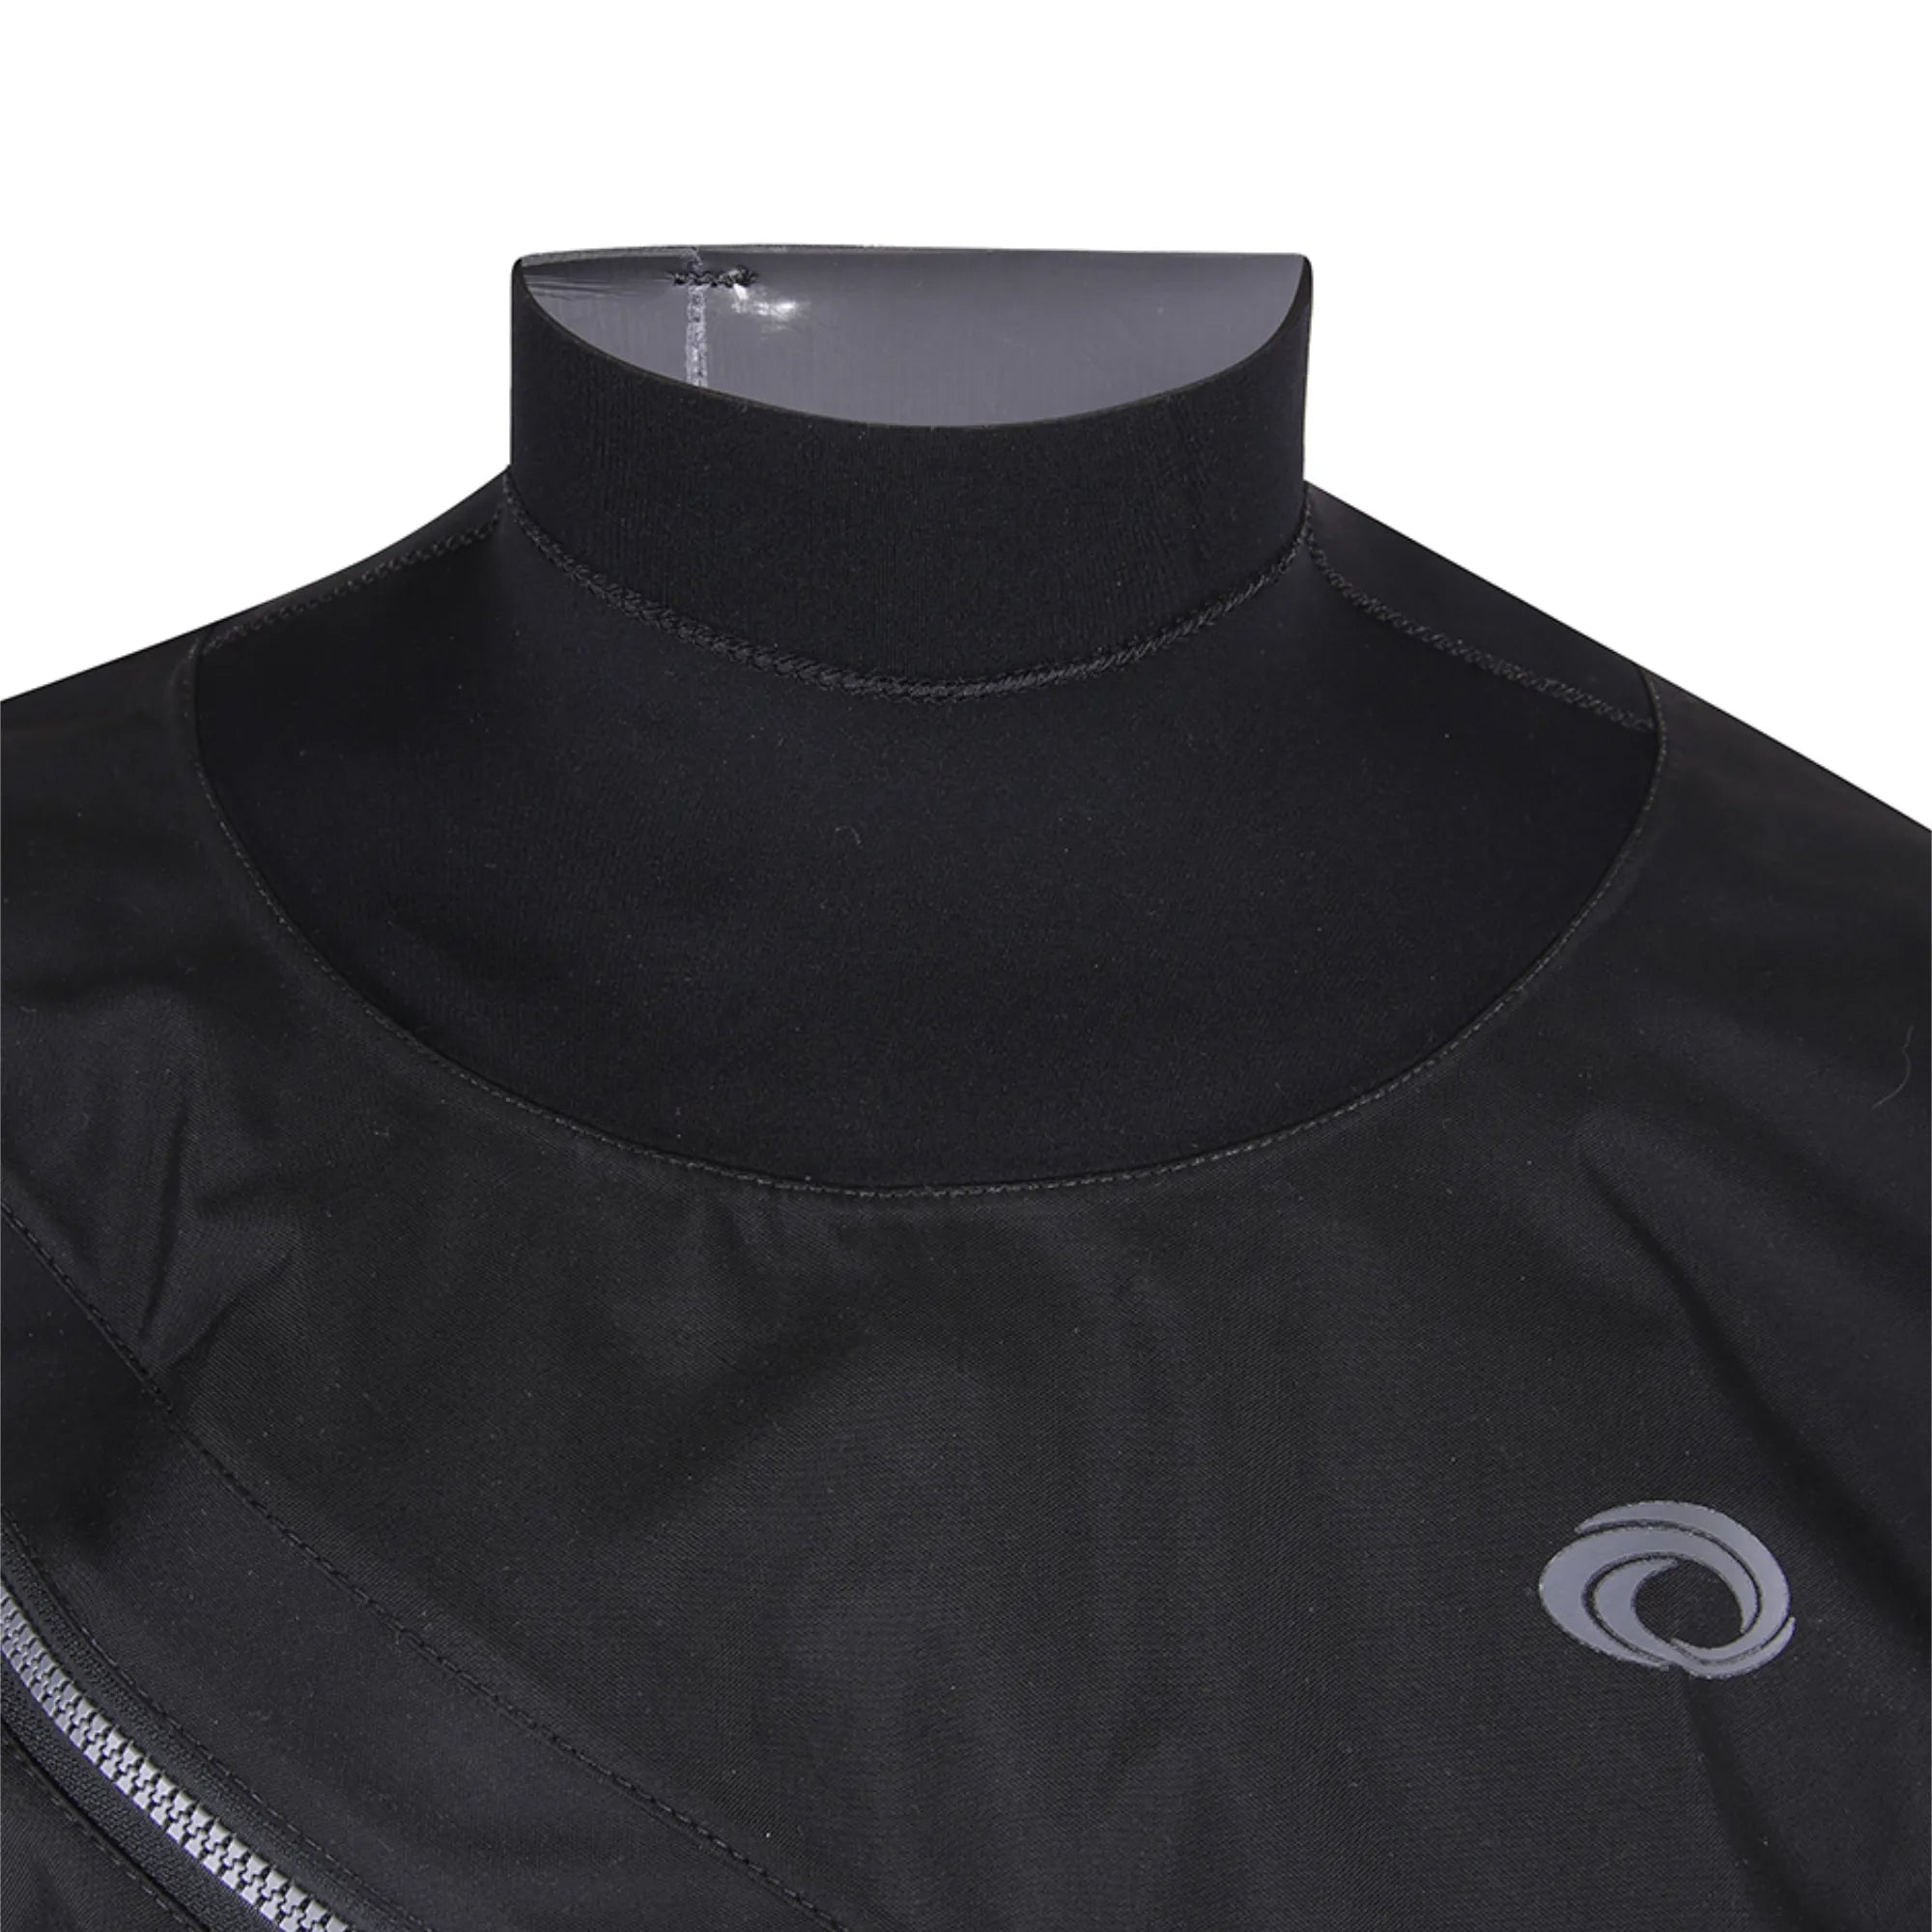 Ezeedon 2.0 Front Entry Drysuit - Black